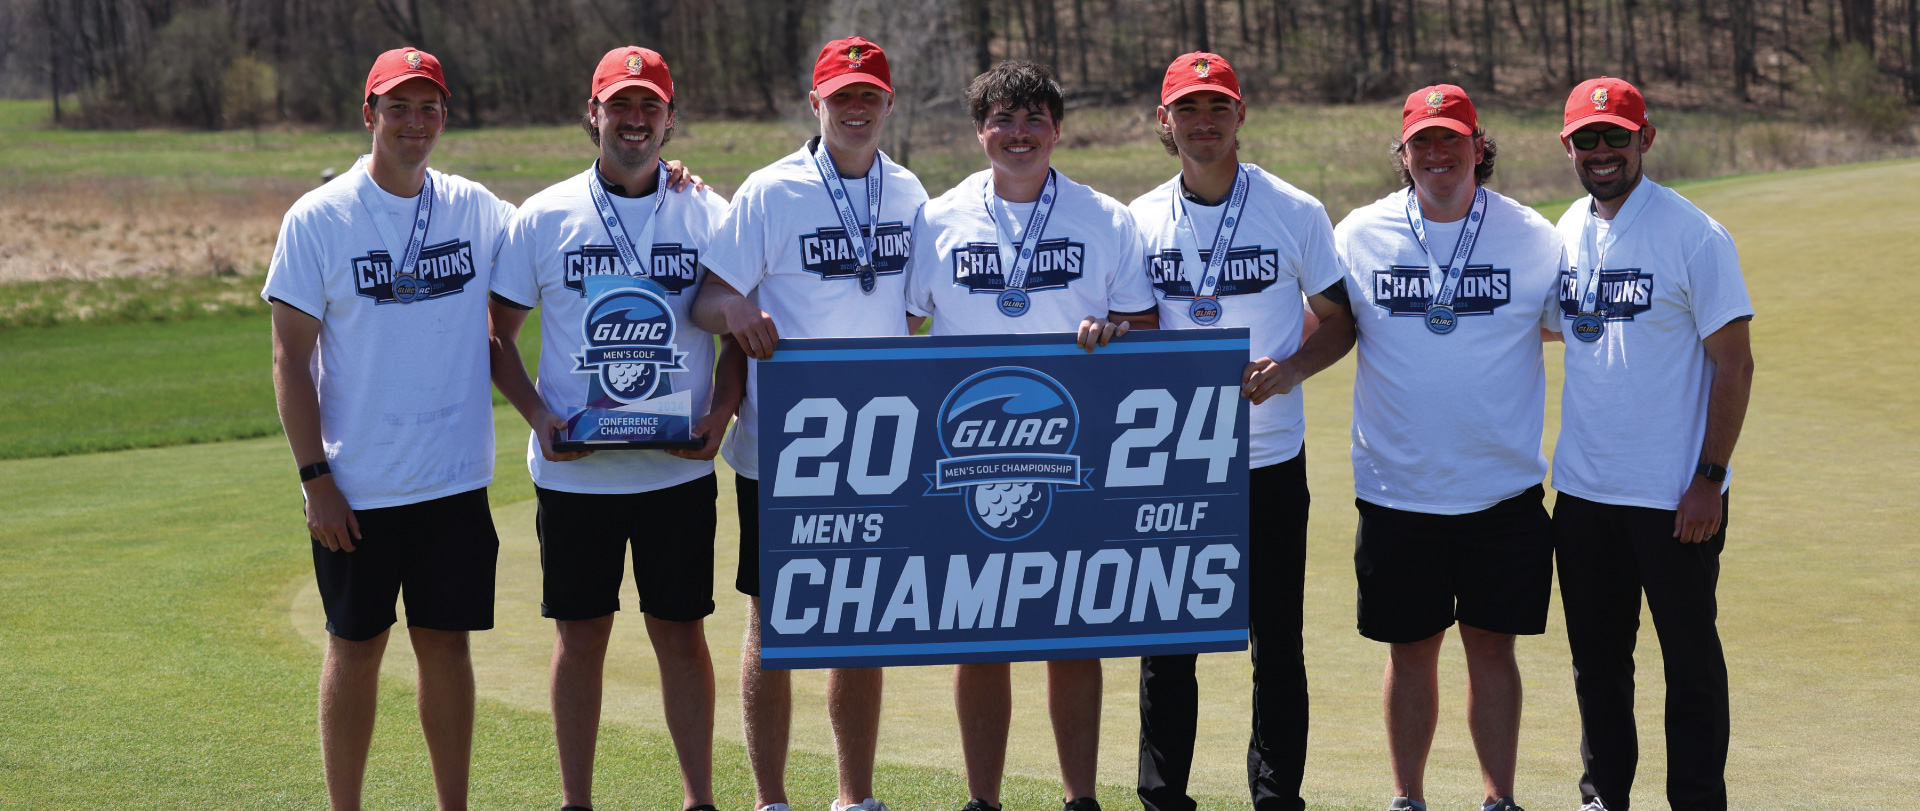 Ferris Men's golf team after winning GLIAC championship